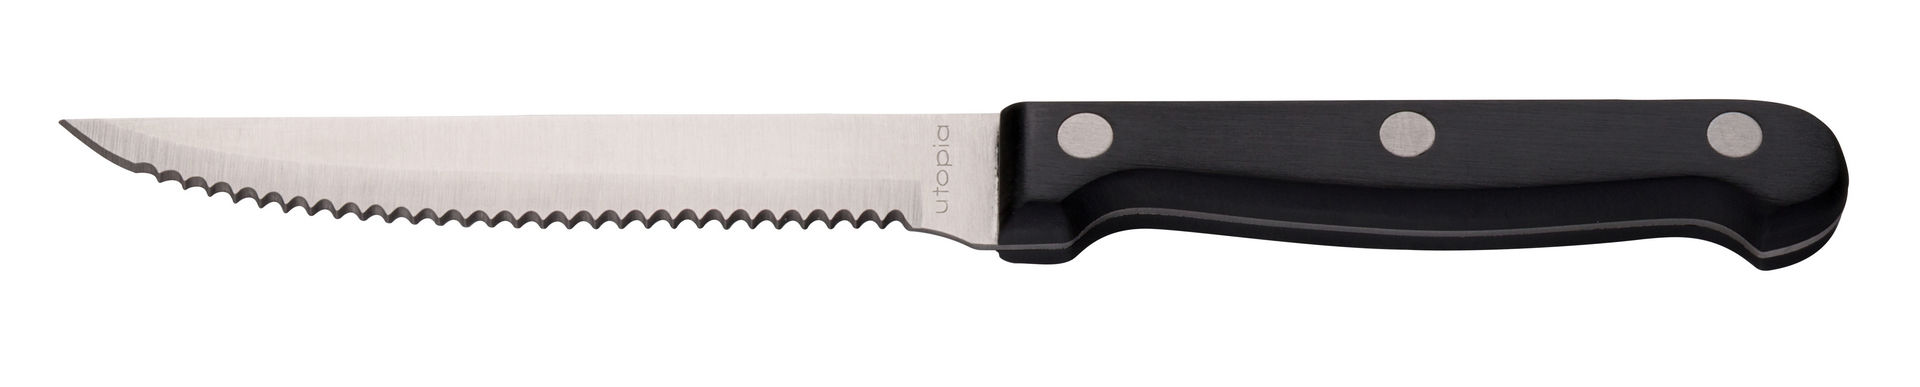 Black Handled Steak Knife - F10643-000000-B12240 (Pack of 240)